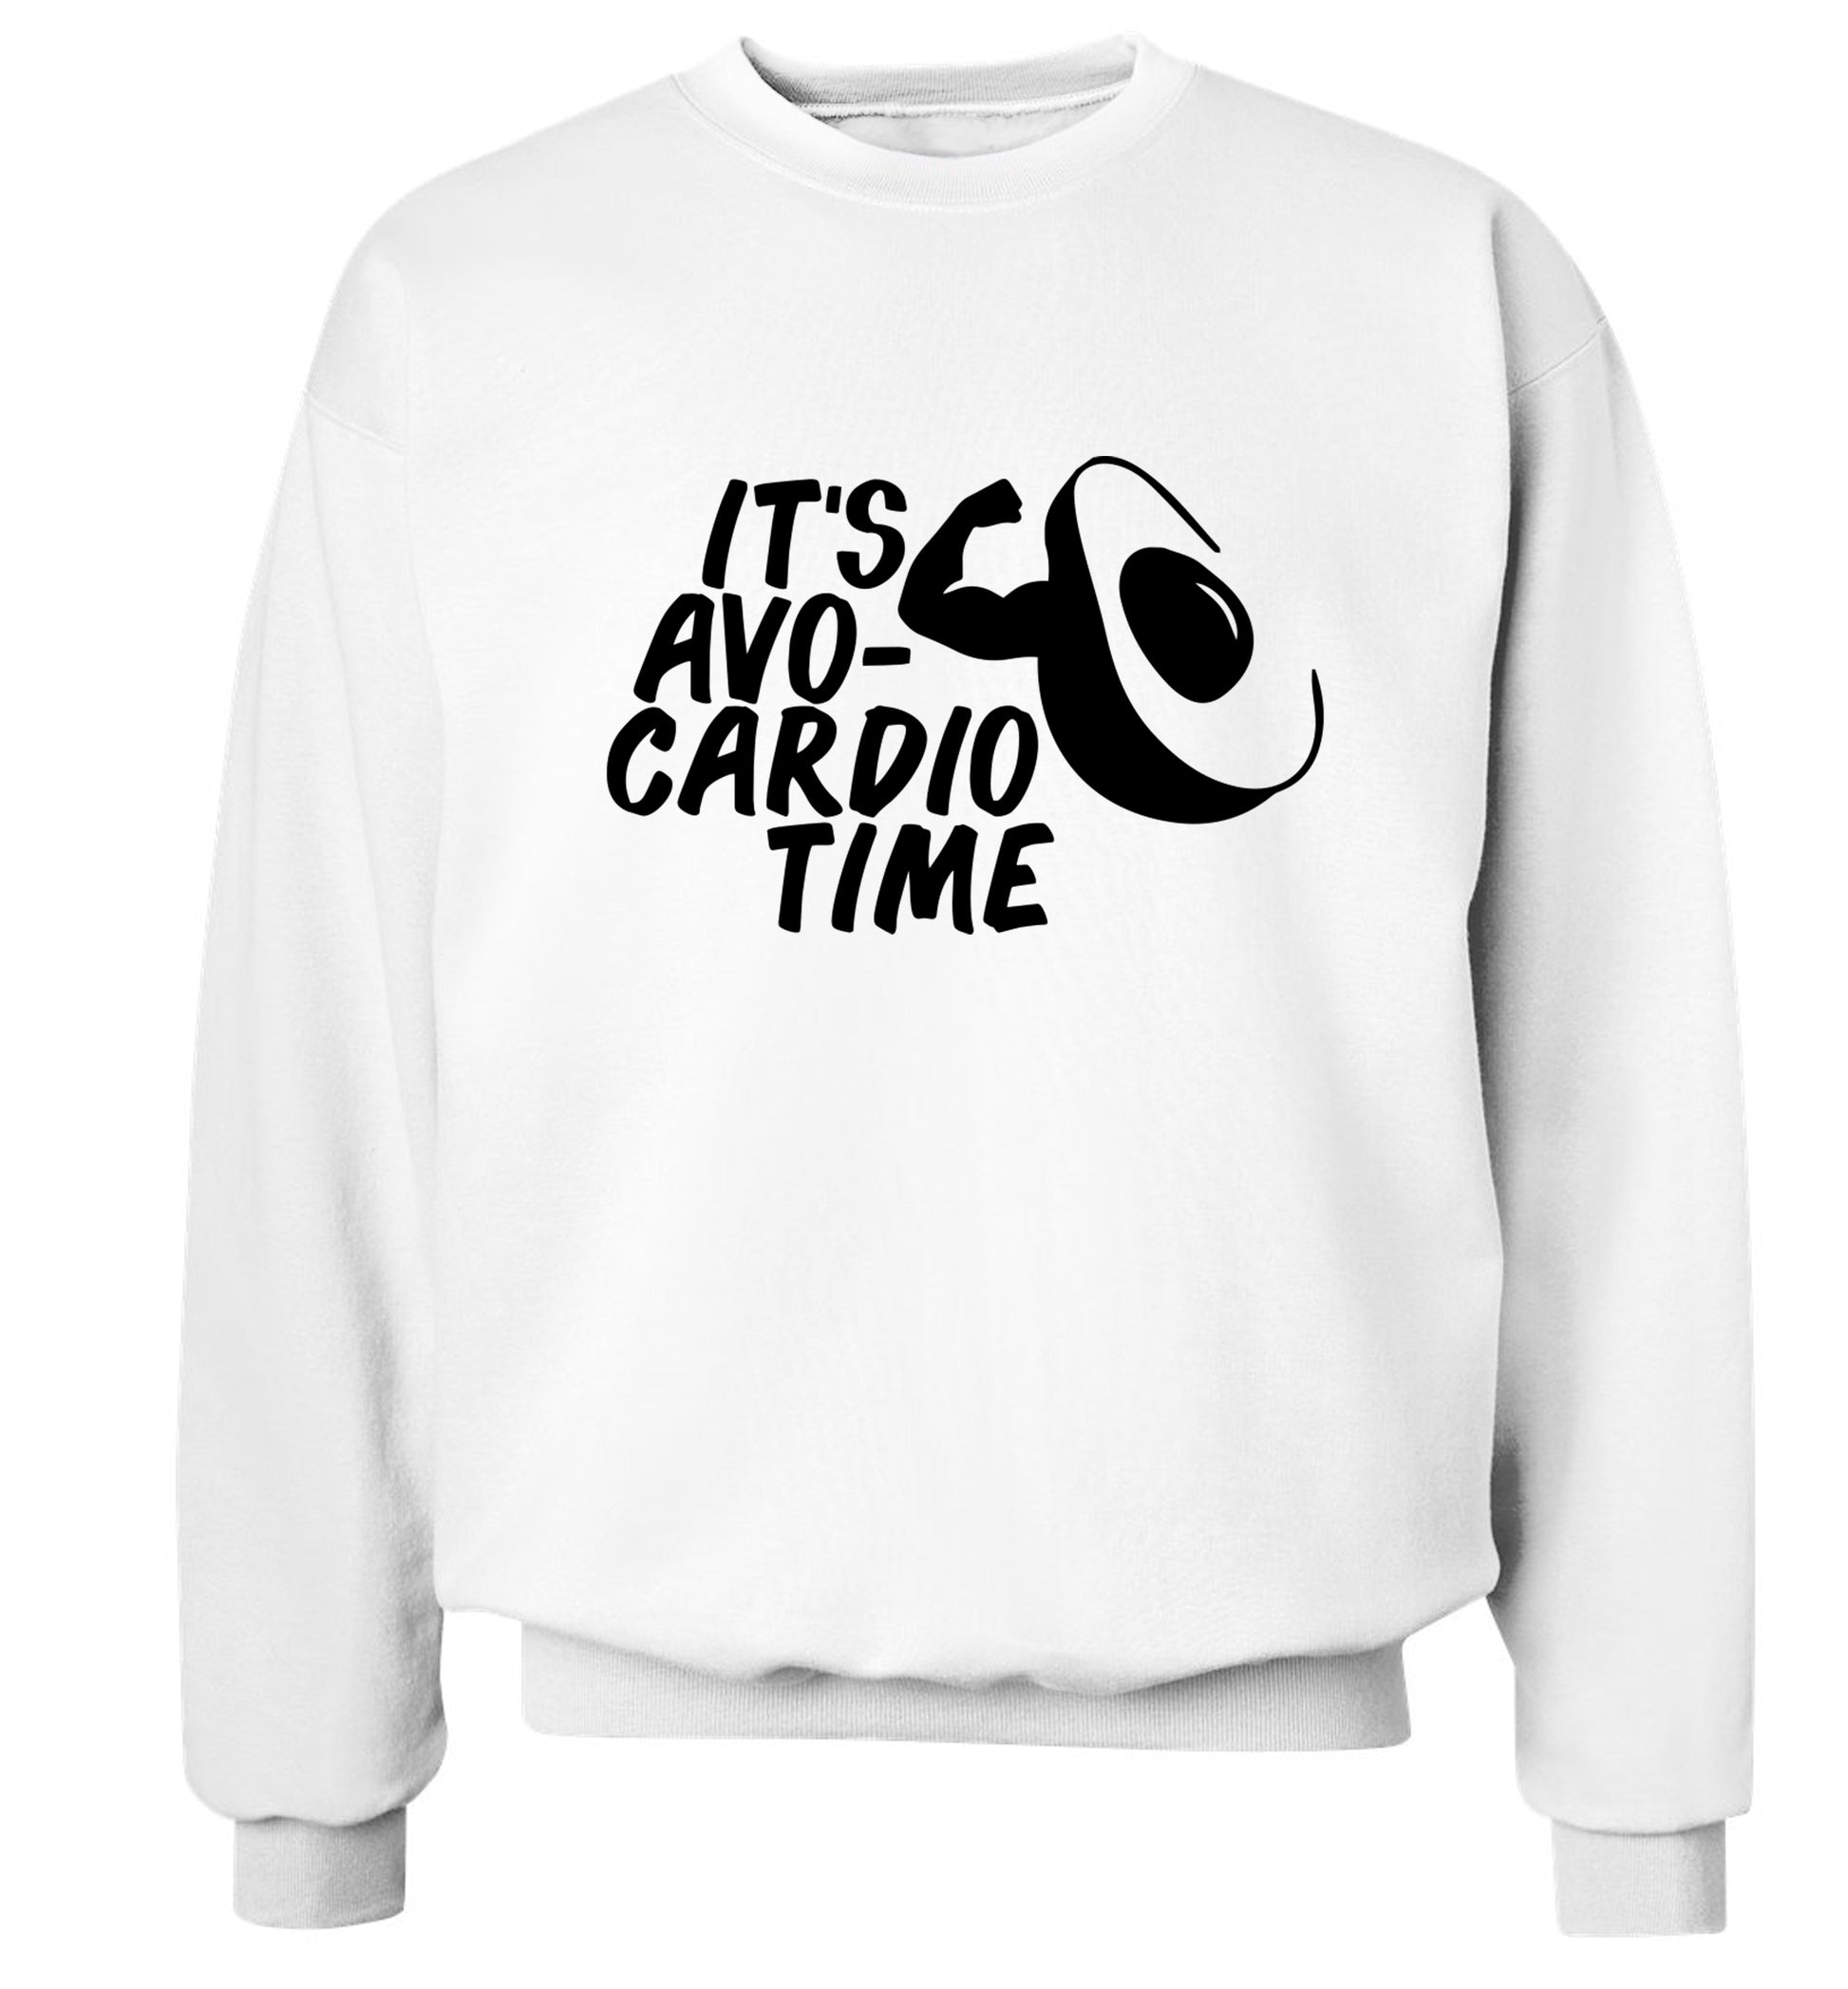 It's avo-cardio time Adult's unisex white Sweater 2XL